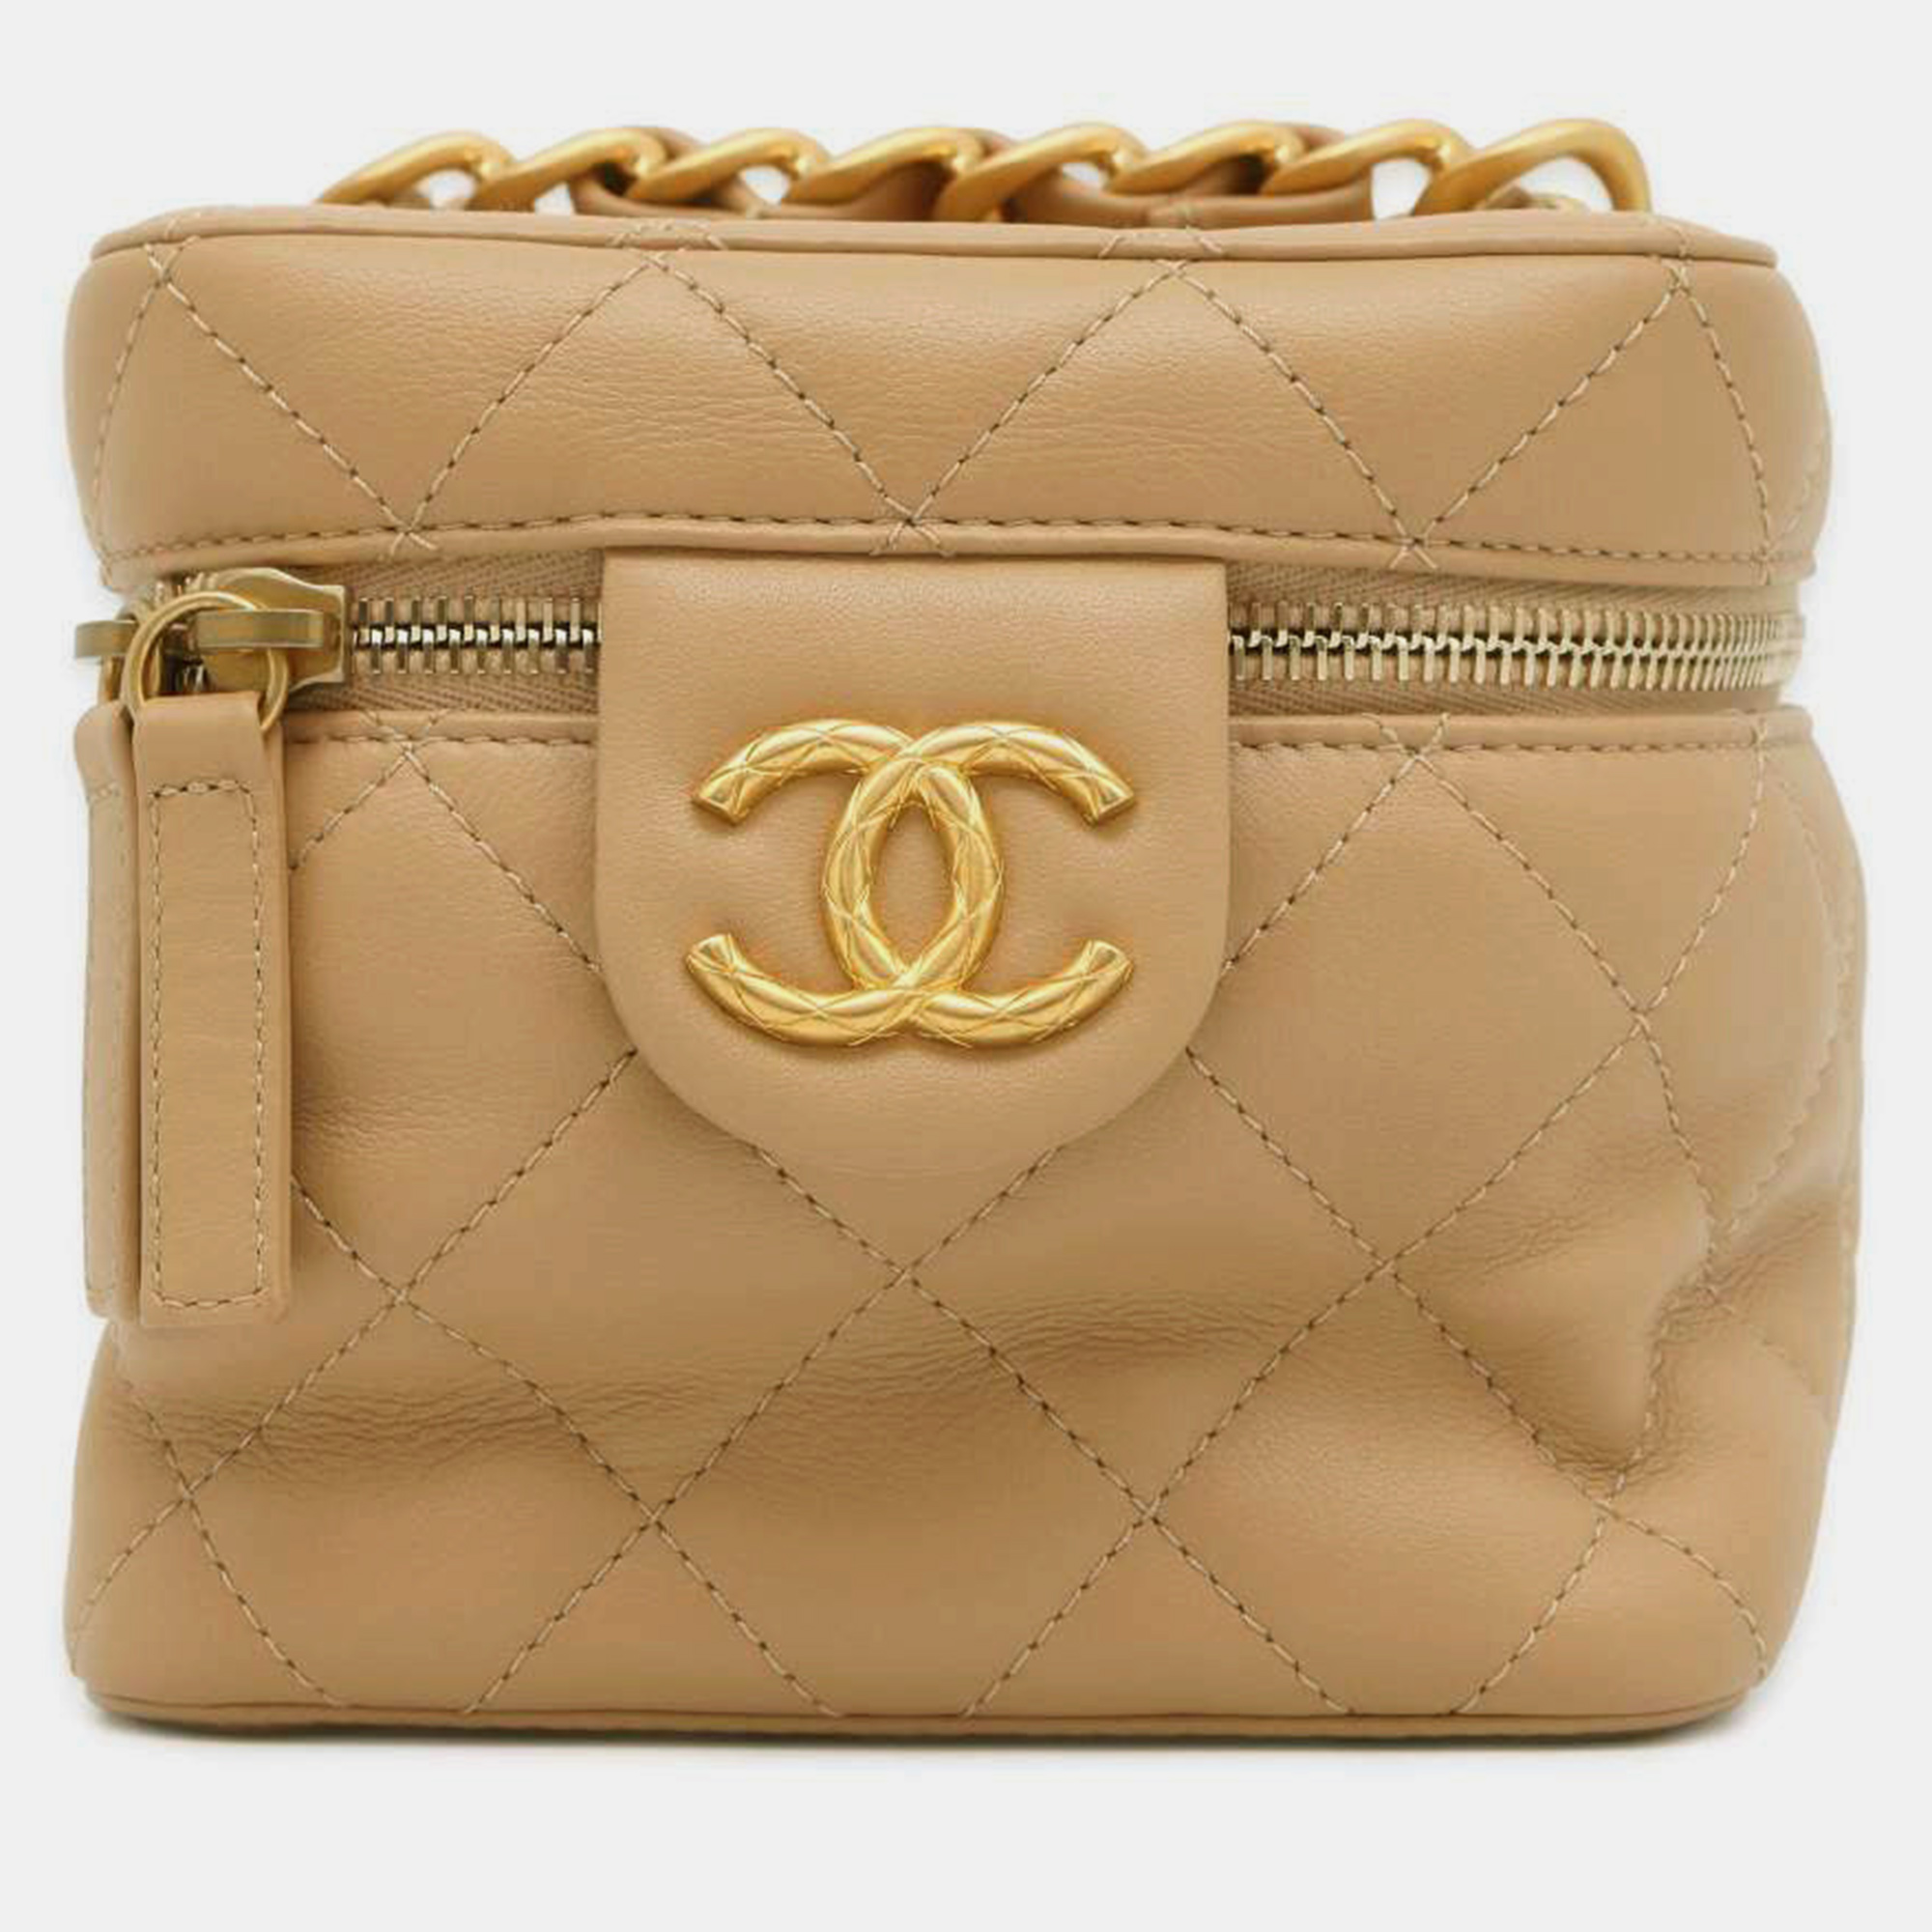 

Chanel Beige Leather CC Vanity Case